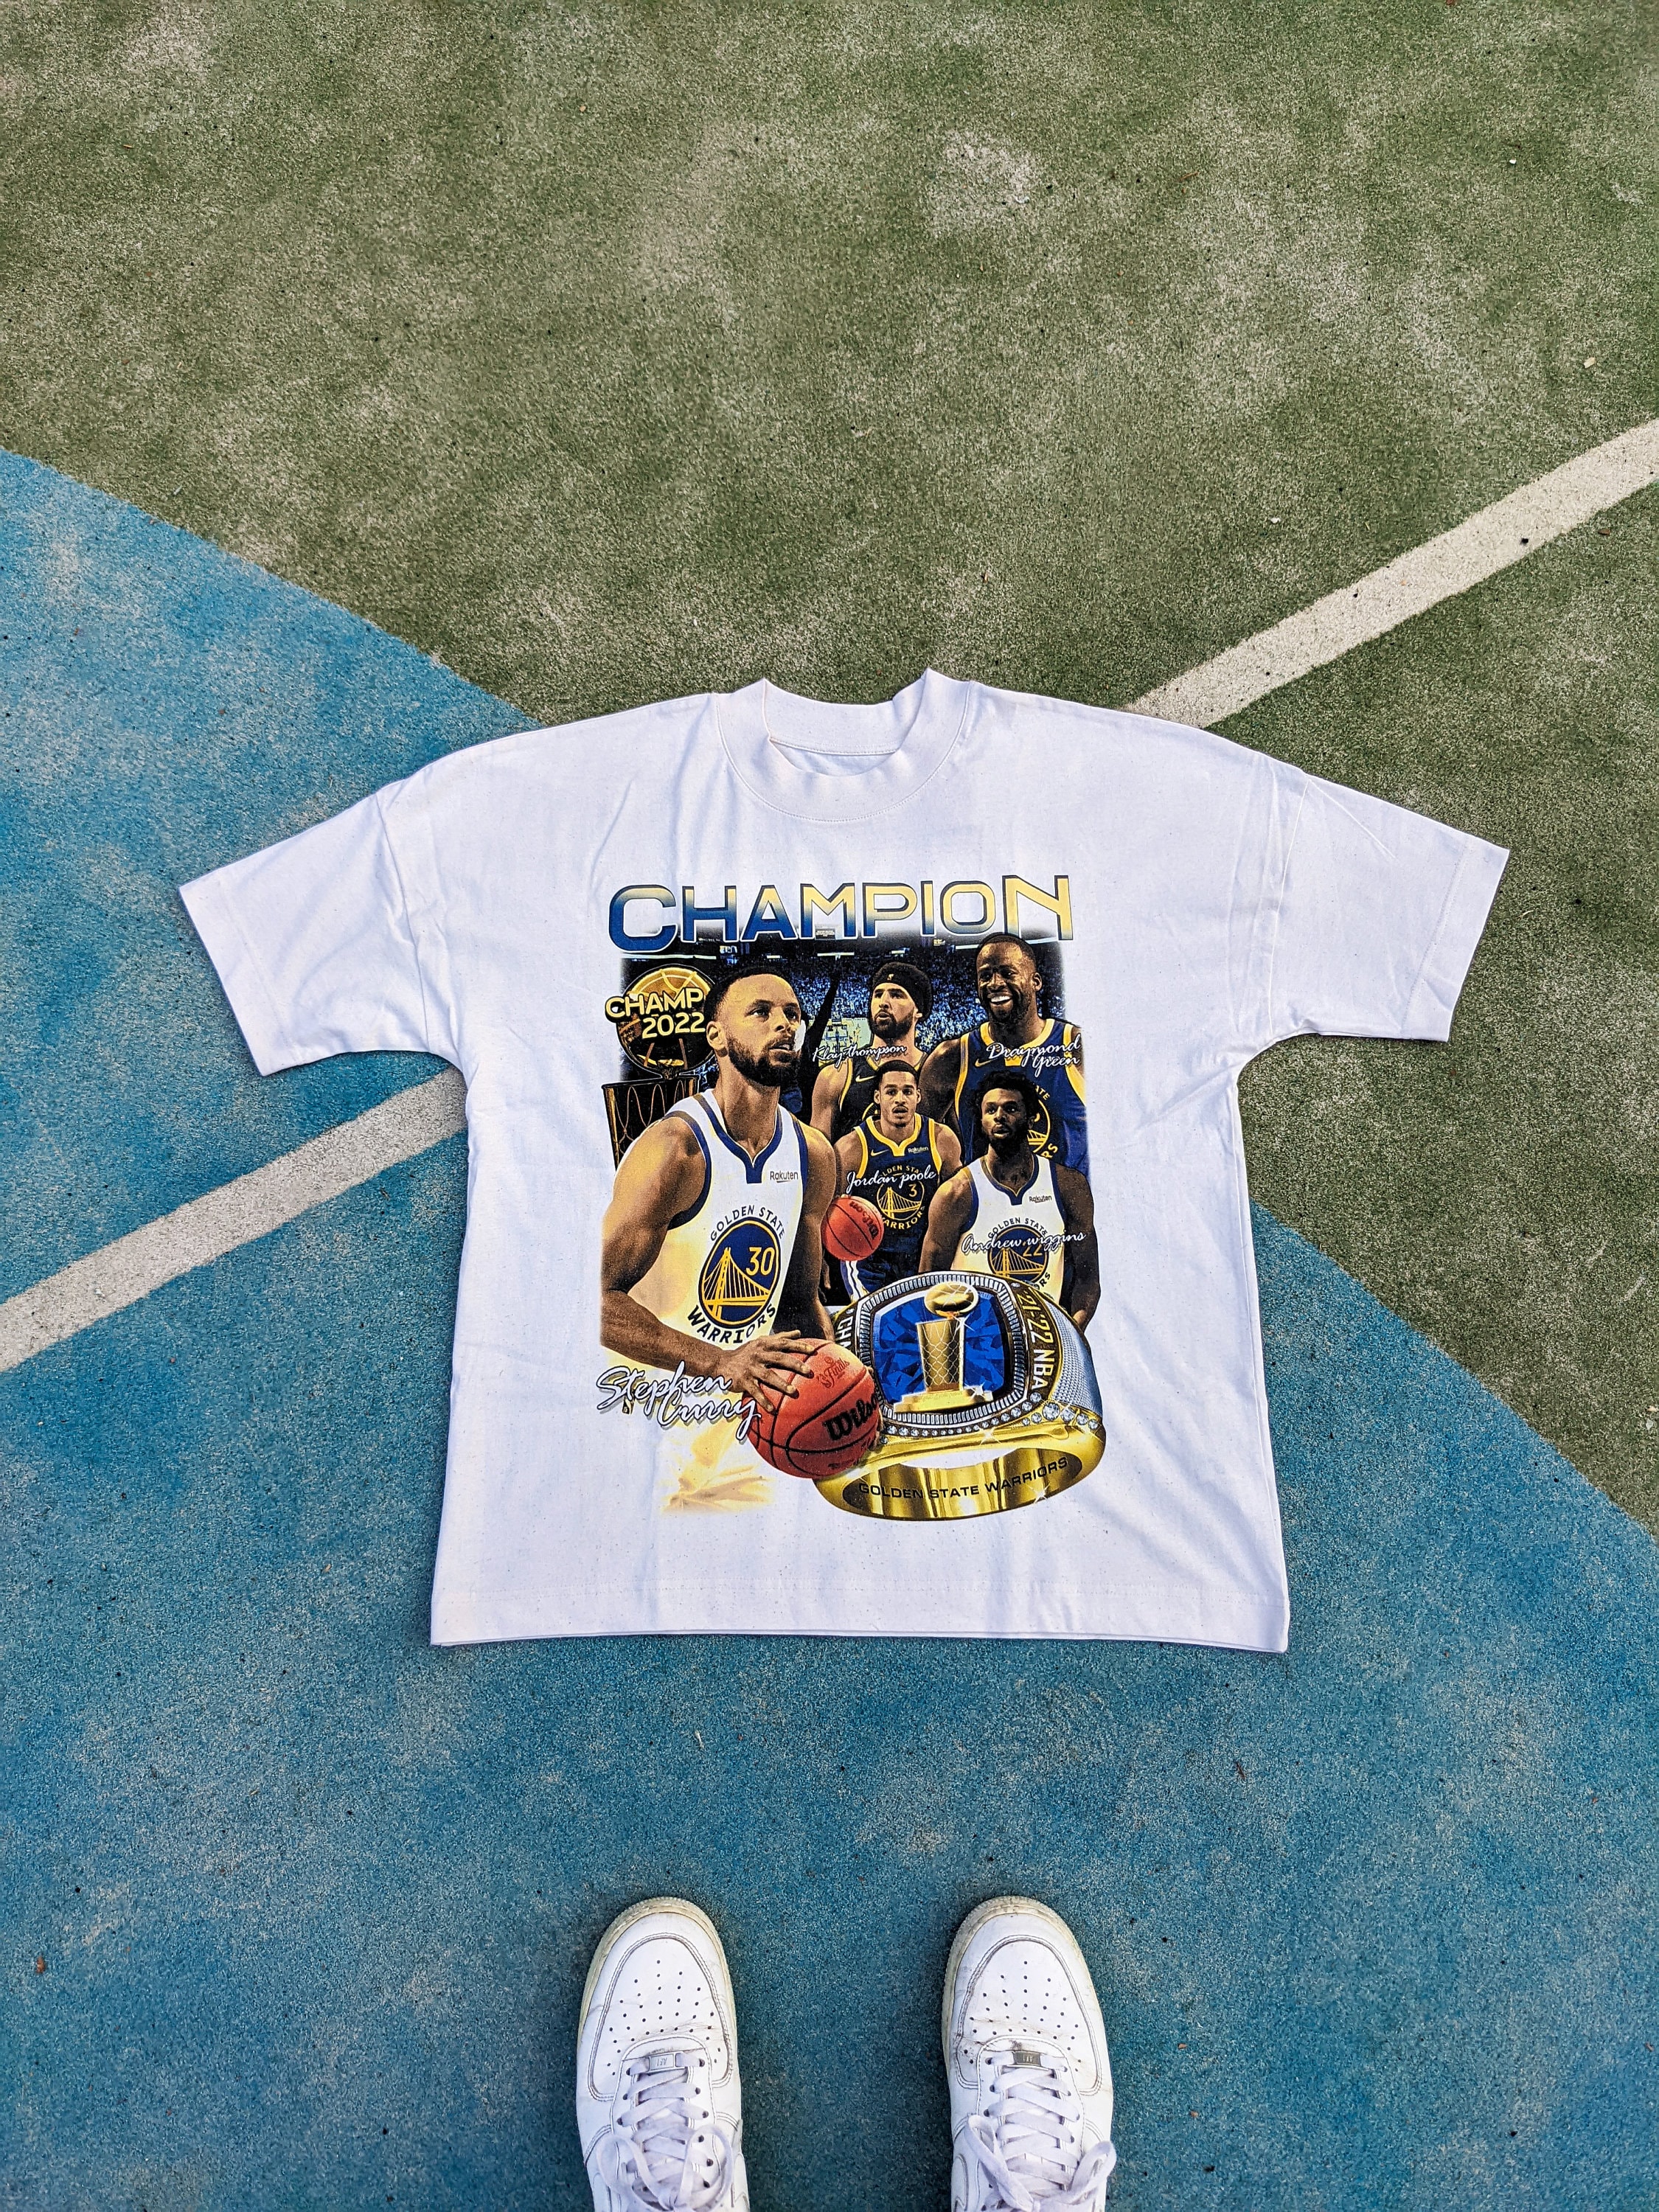 Golden State Warriors Boys T-Shirt XL Logo White Stephen Curry 30 Adidas  READ 